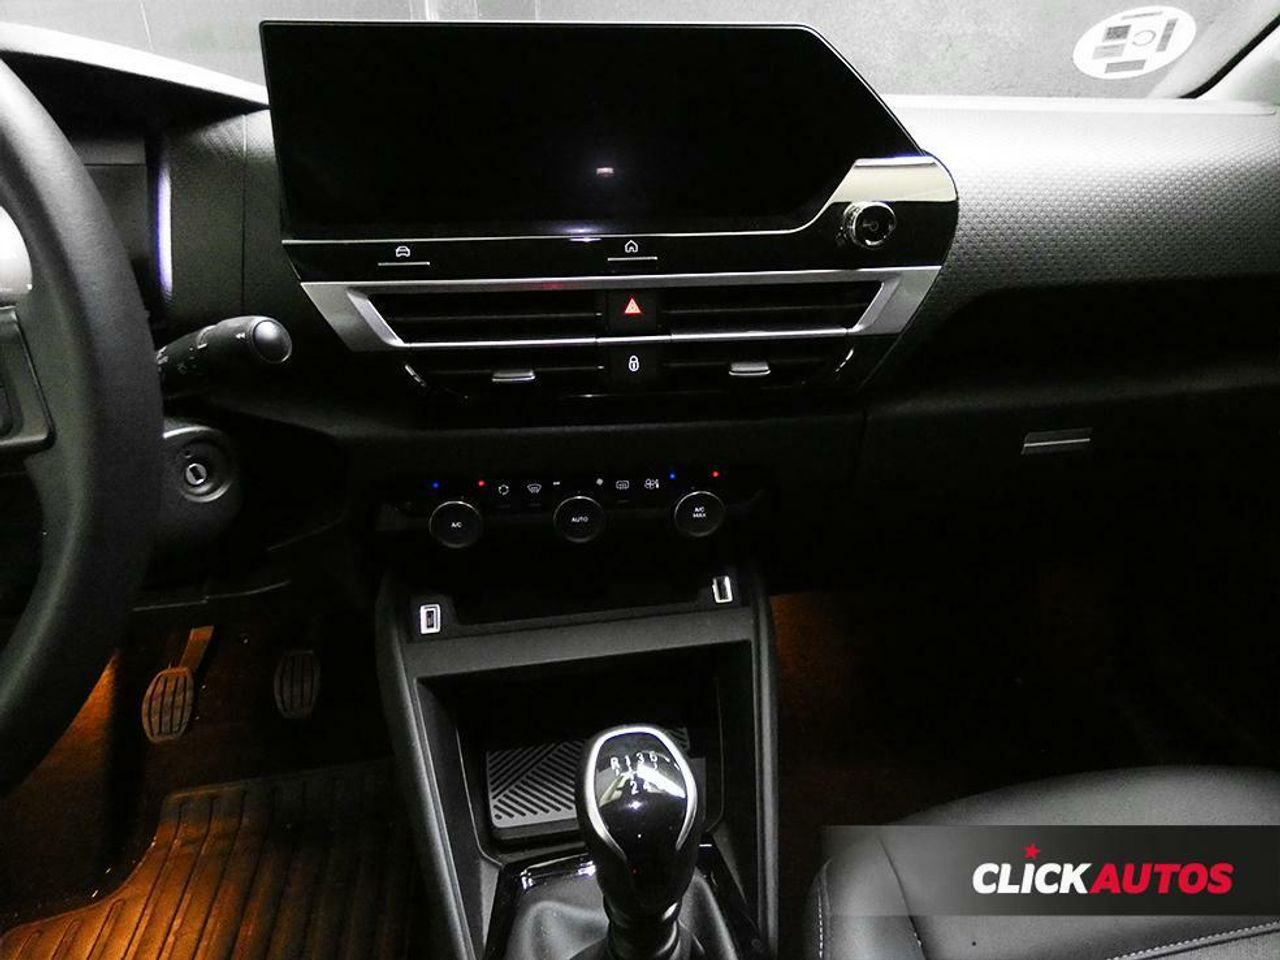 Foto Audi A1 Sportback 6